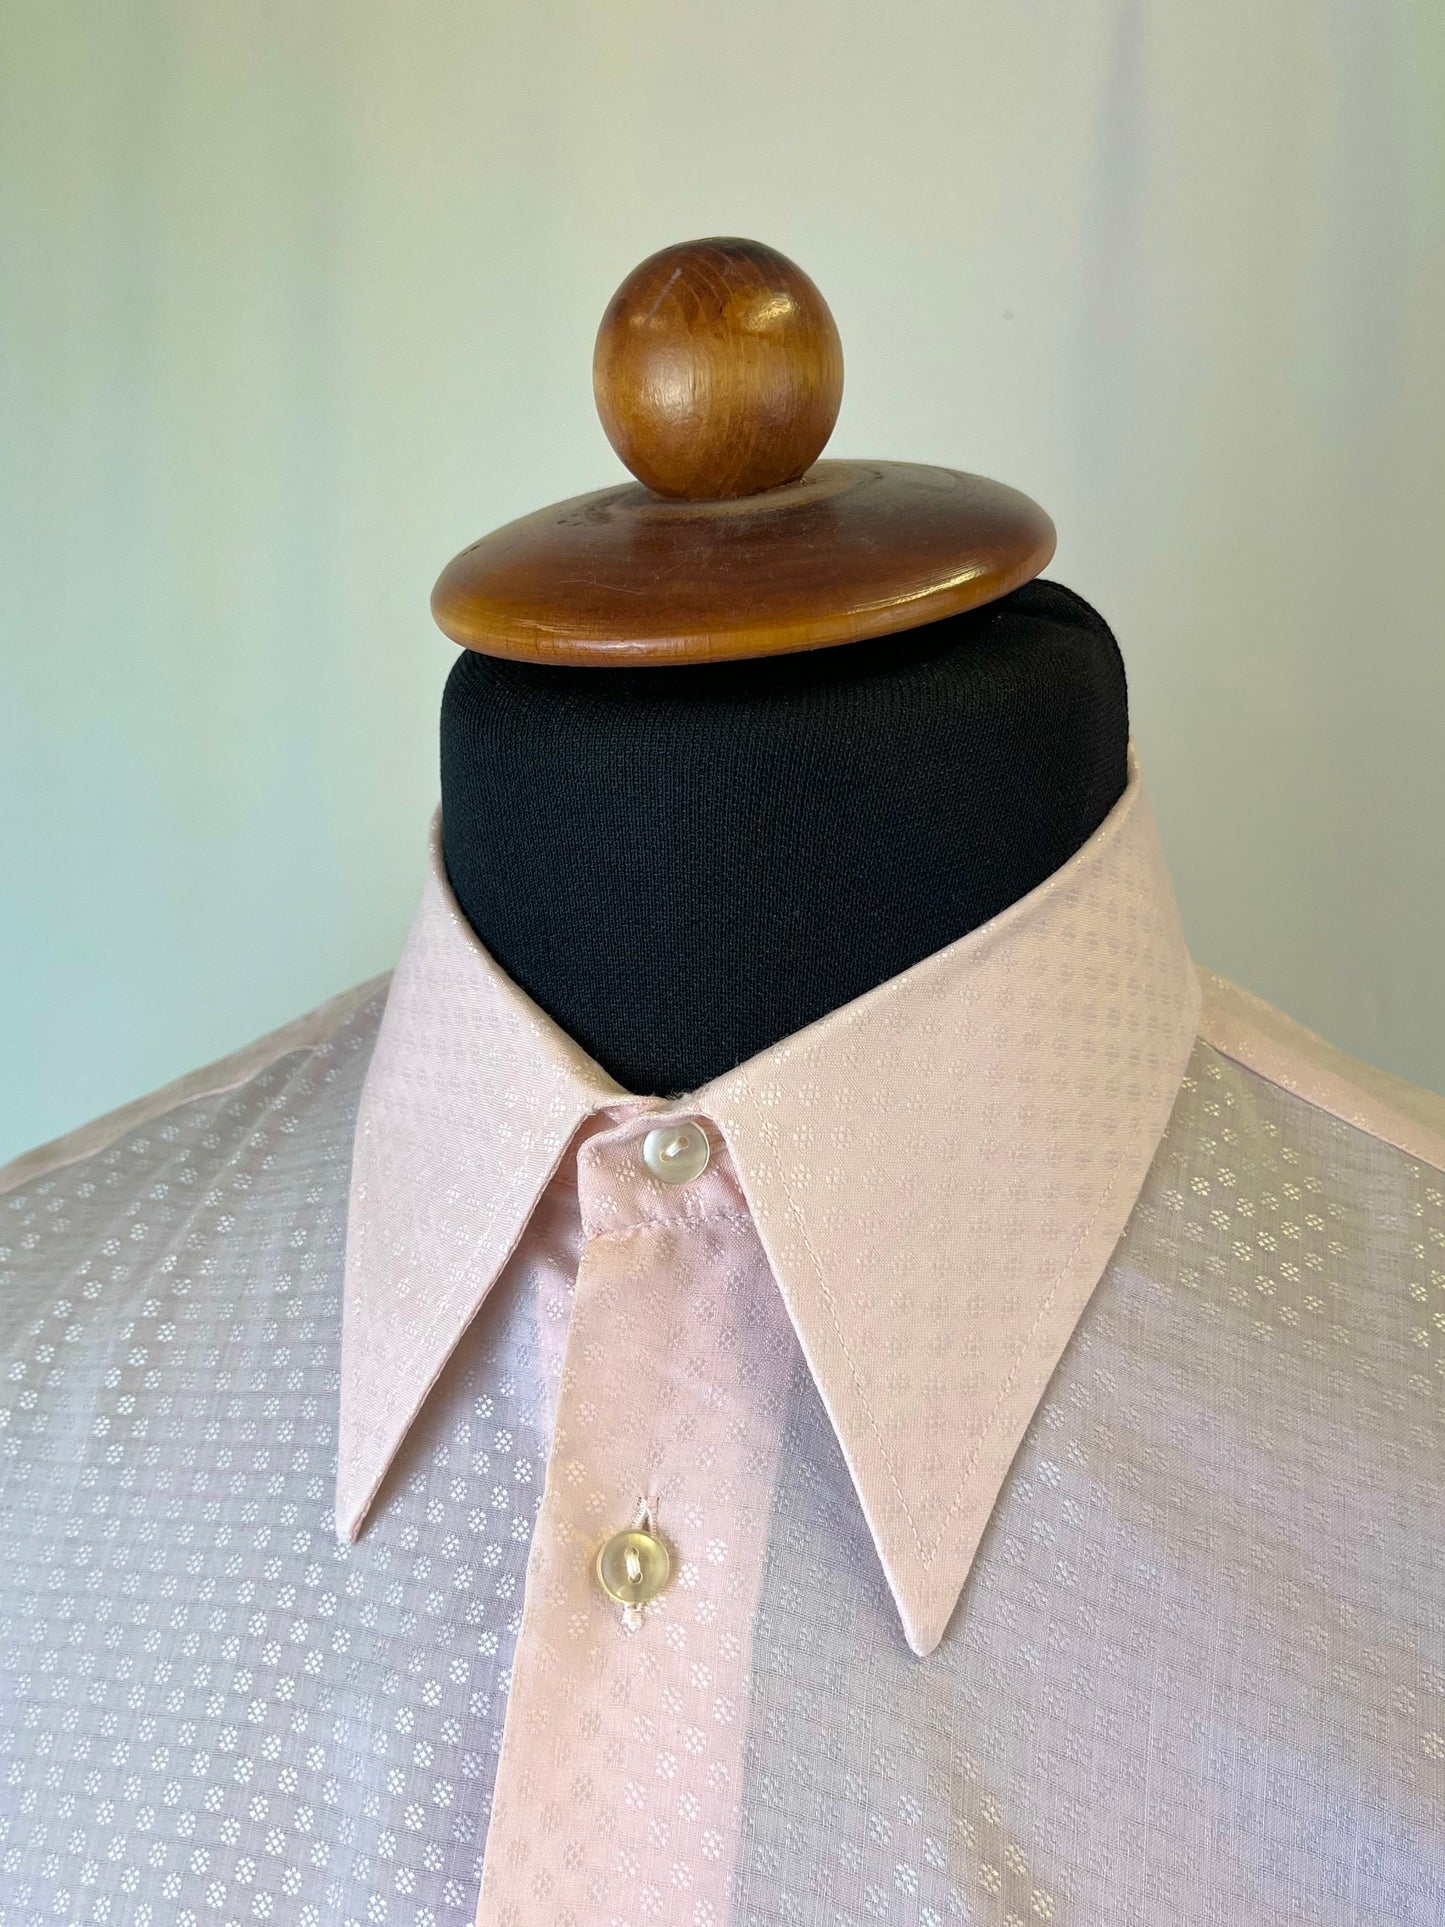 Camicia anni ‘70 rosa microfantasia tg. S-M